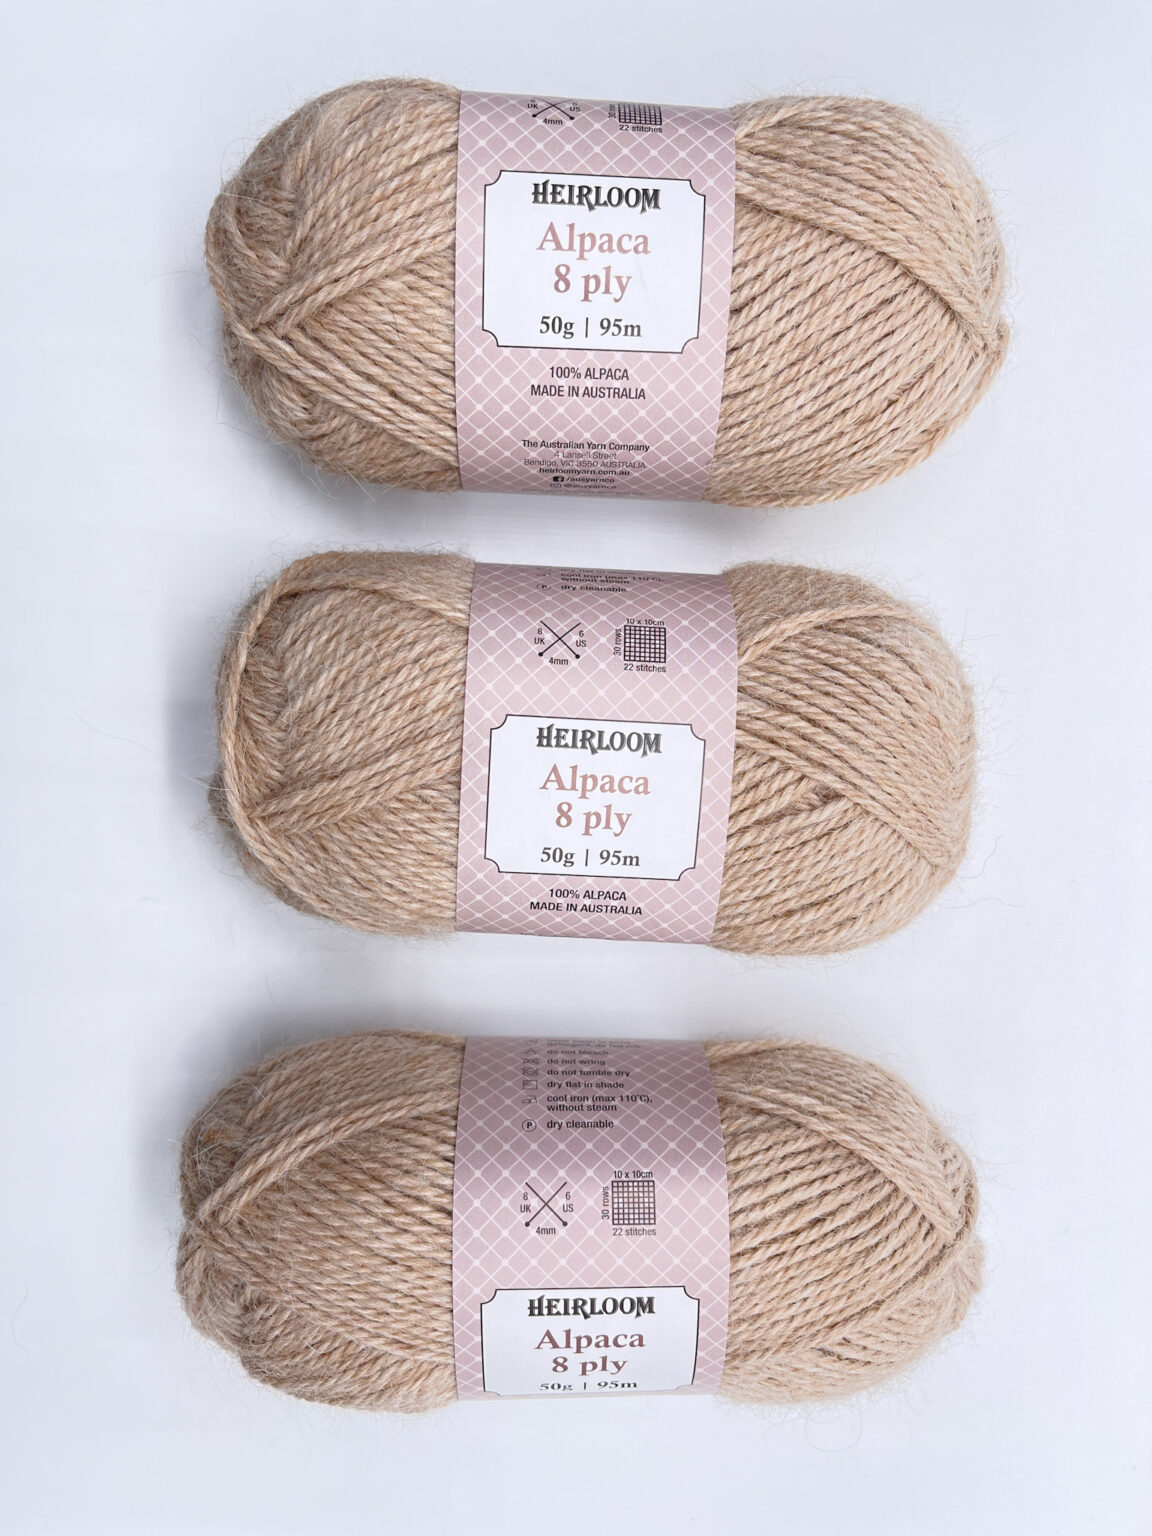 Heirloom Alpaca (8 ply) - The Knitting Nook